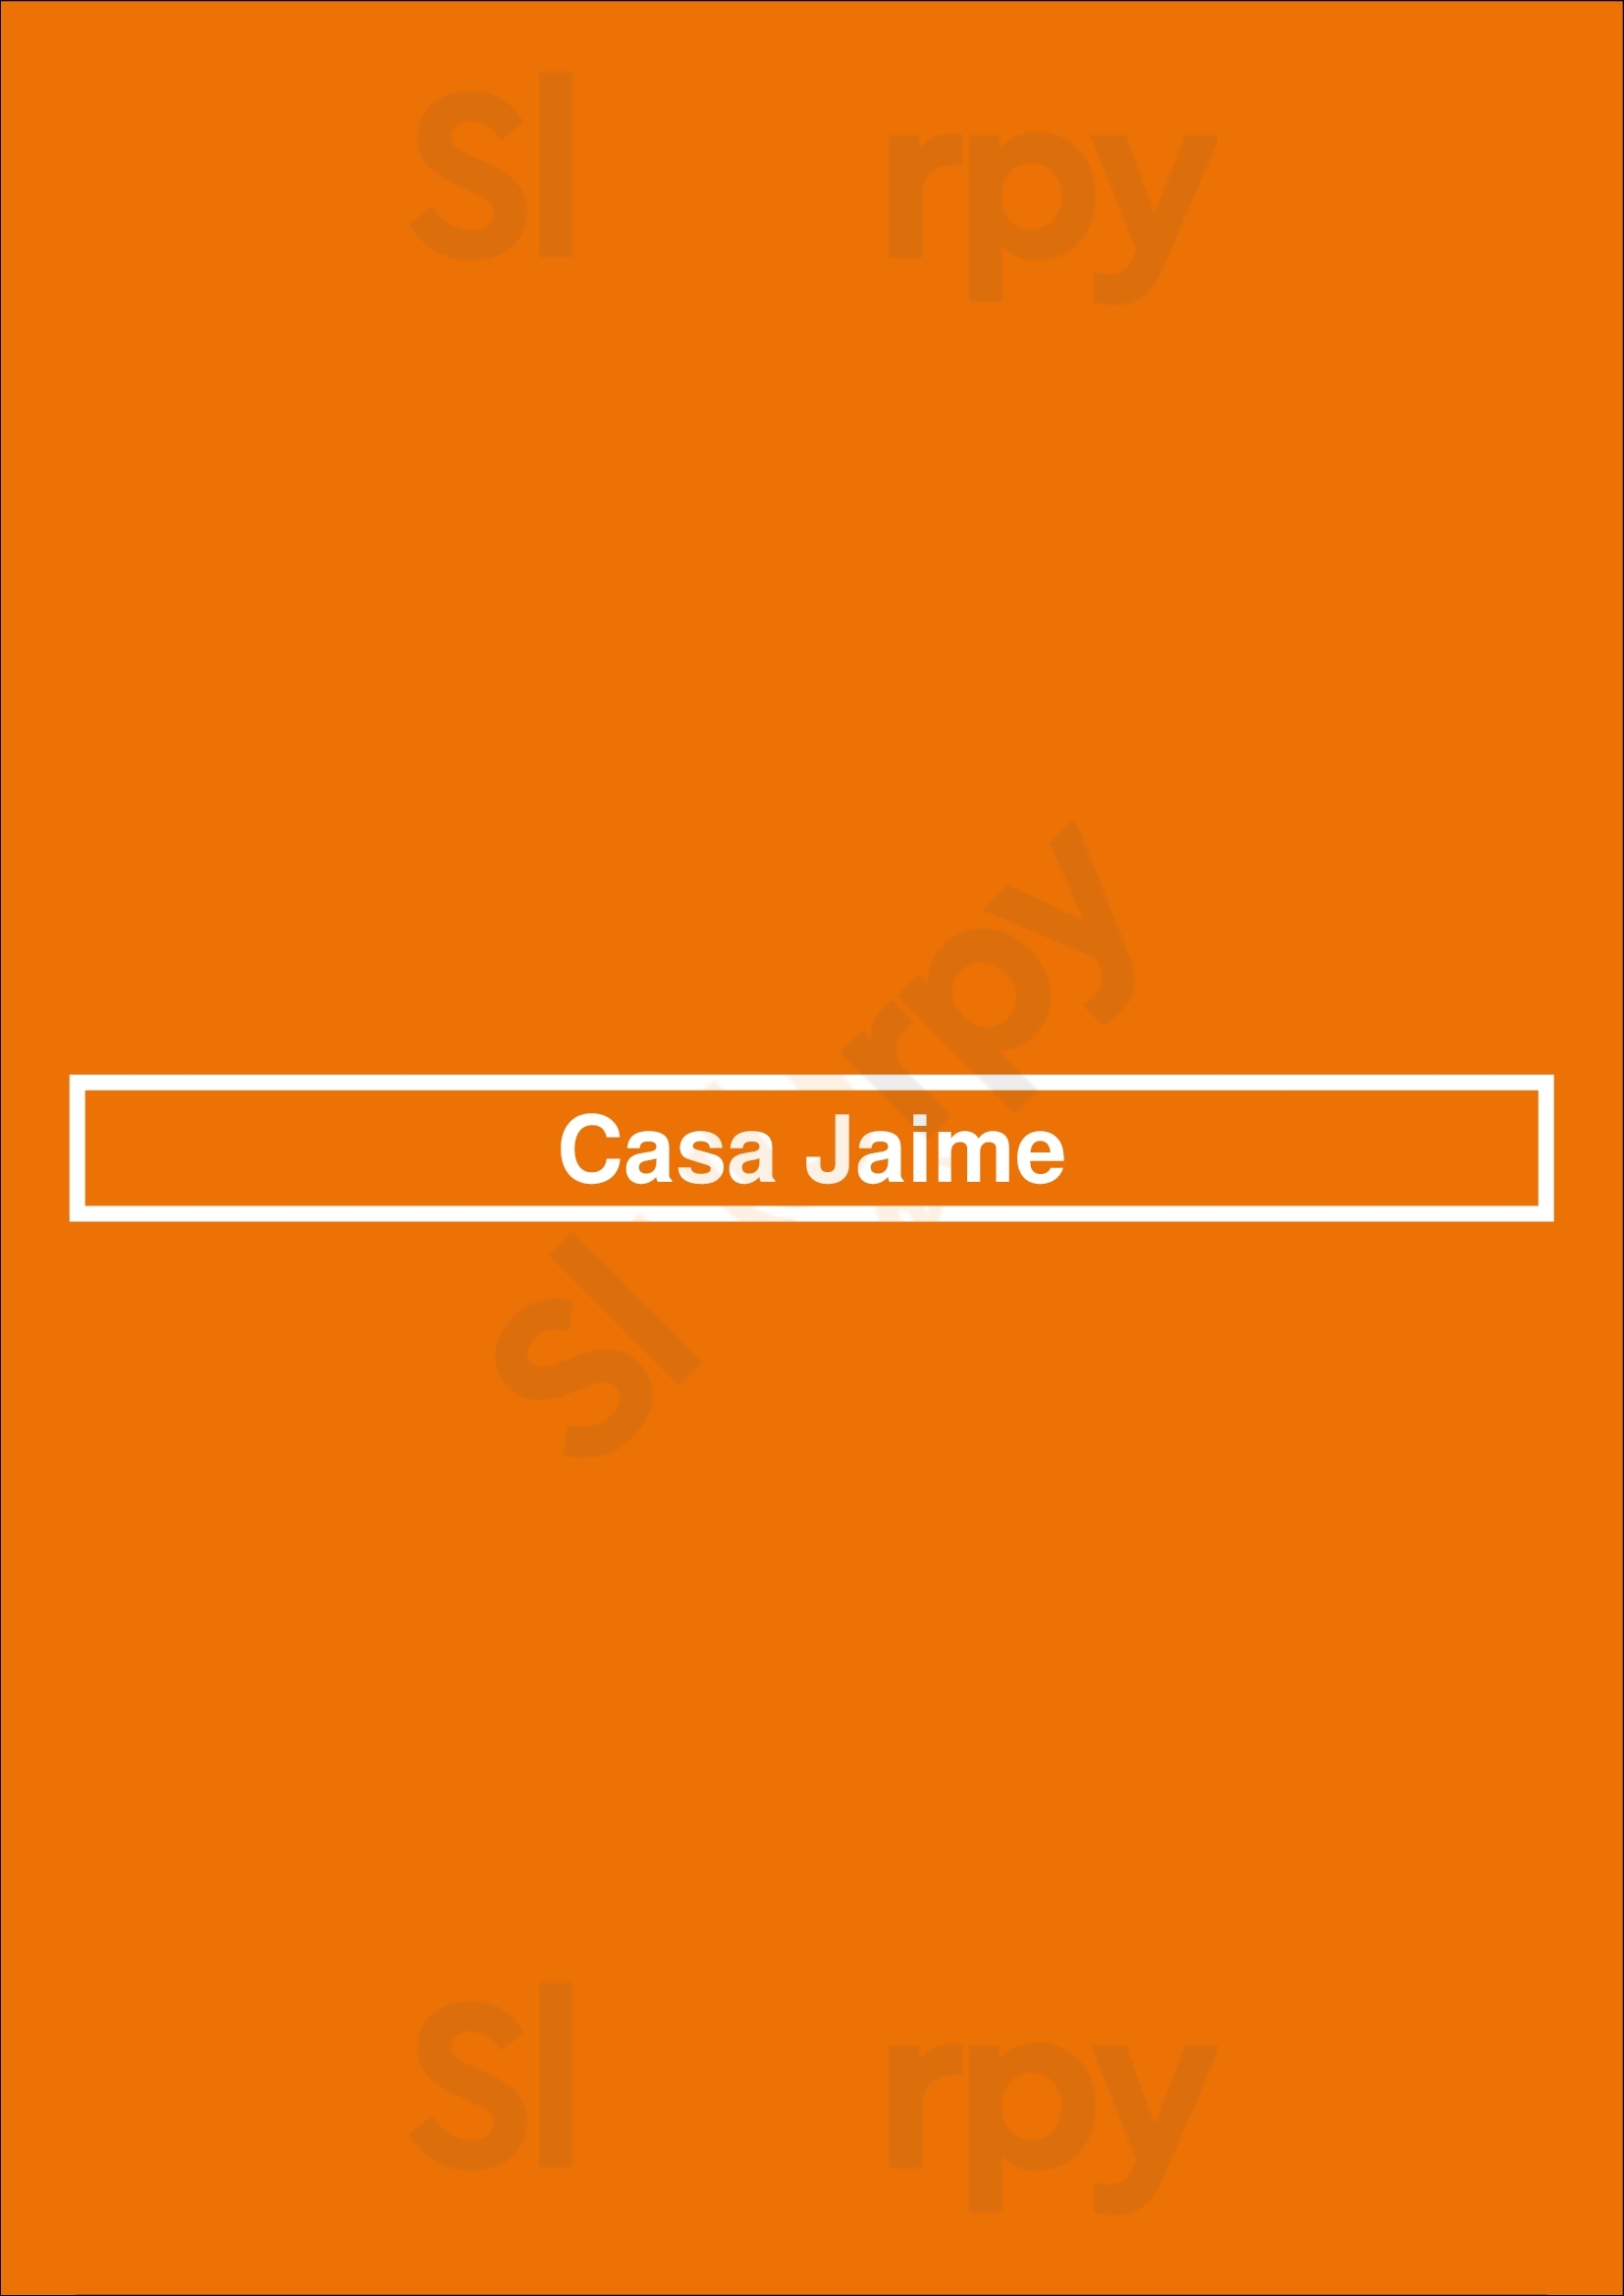 Casa Jaime Barcelona Menu - 1